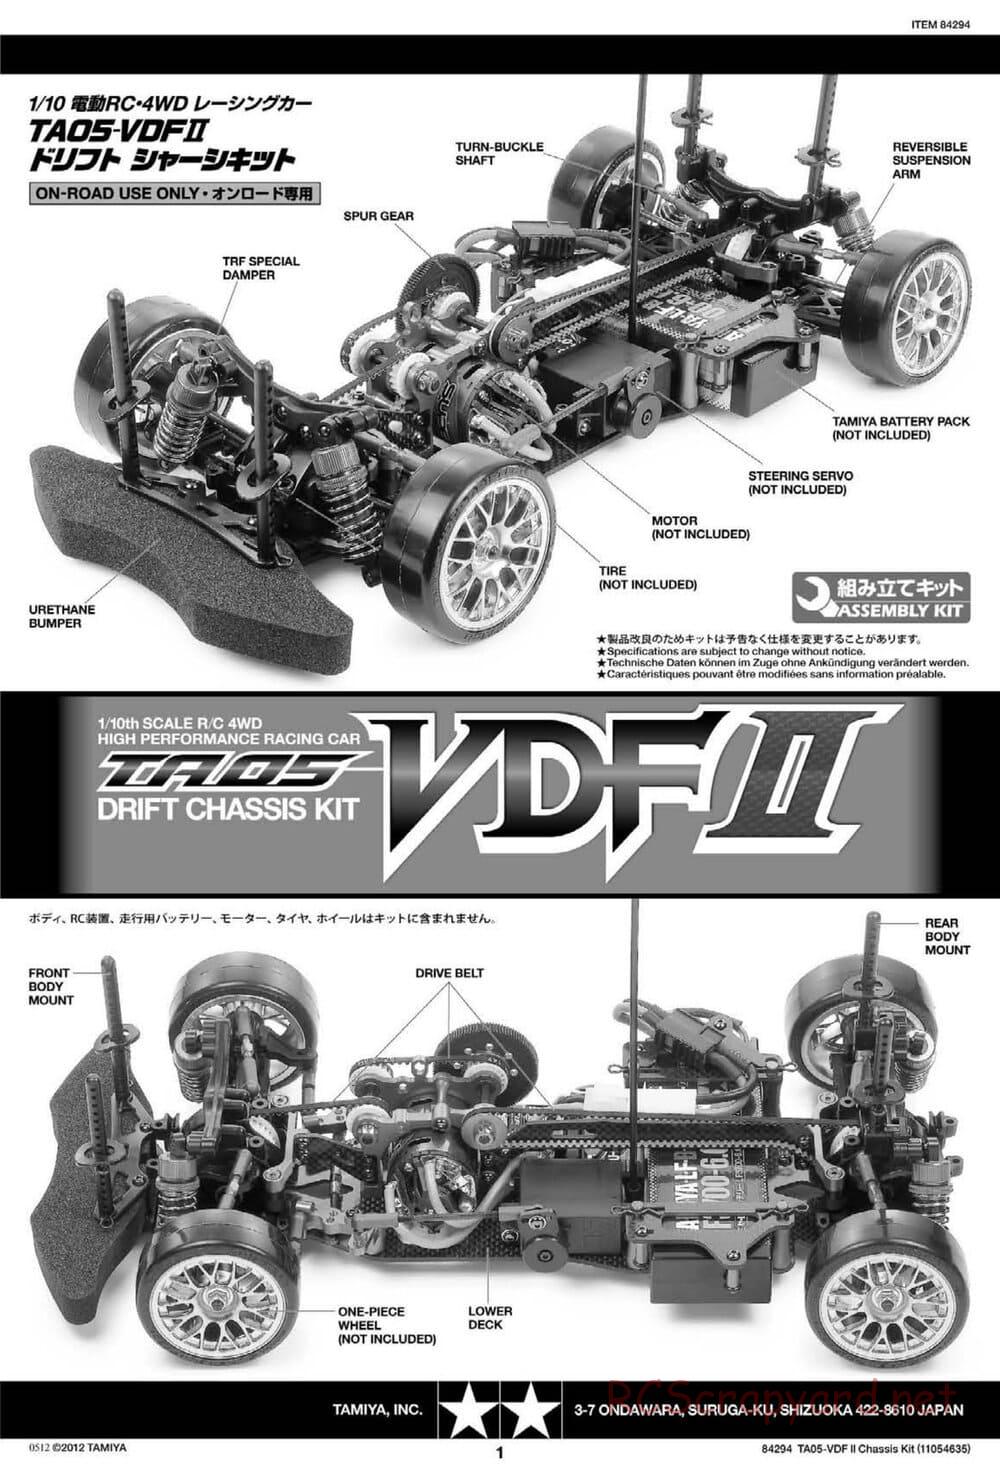 Tamiya - TA05-VDF II Drift Chassis - Manual - Page 1